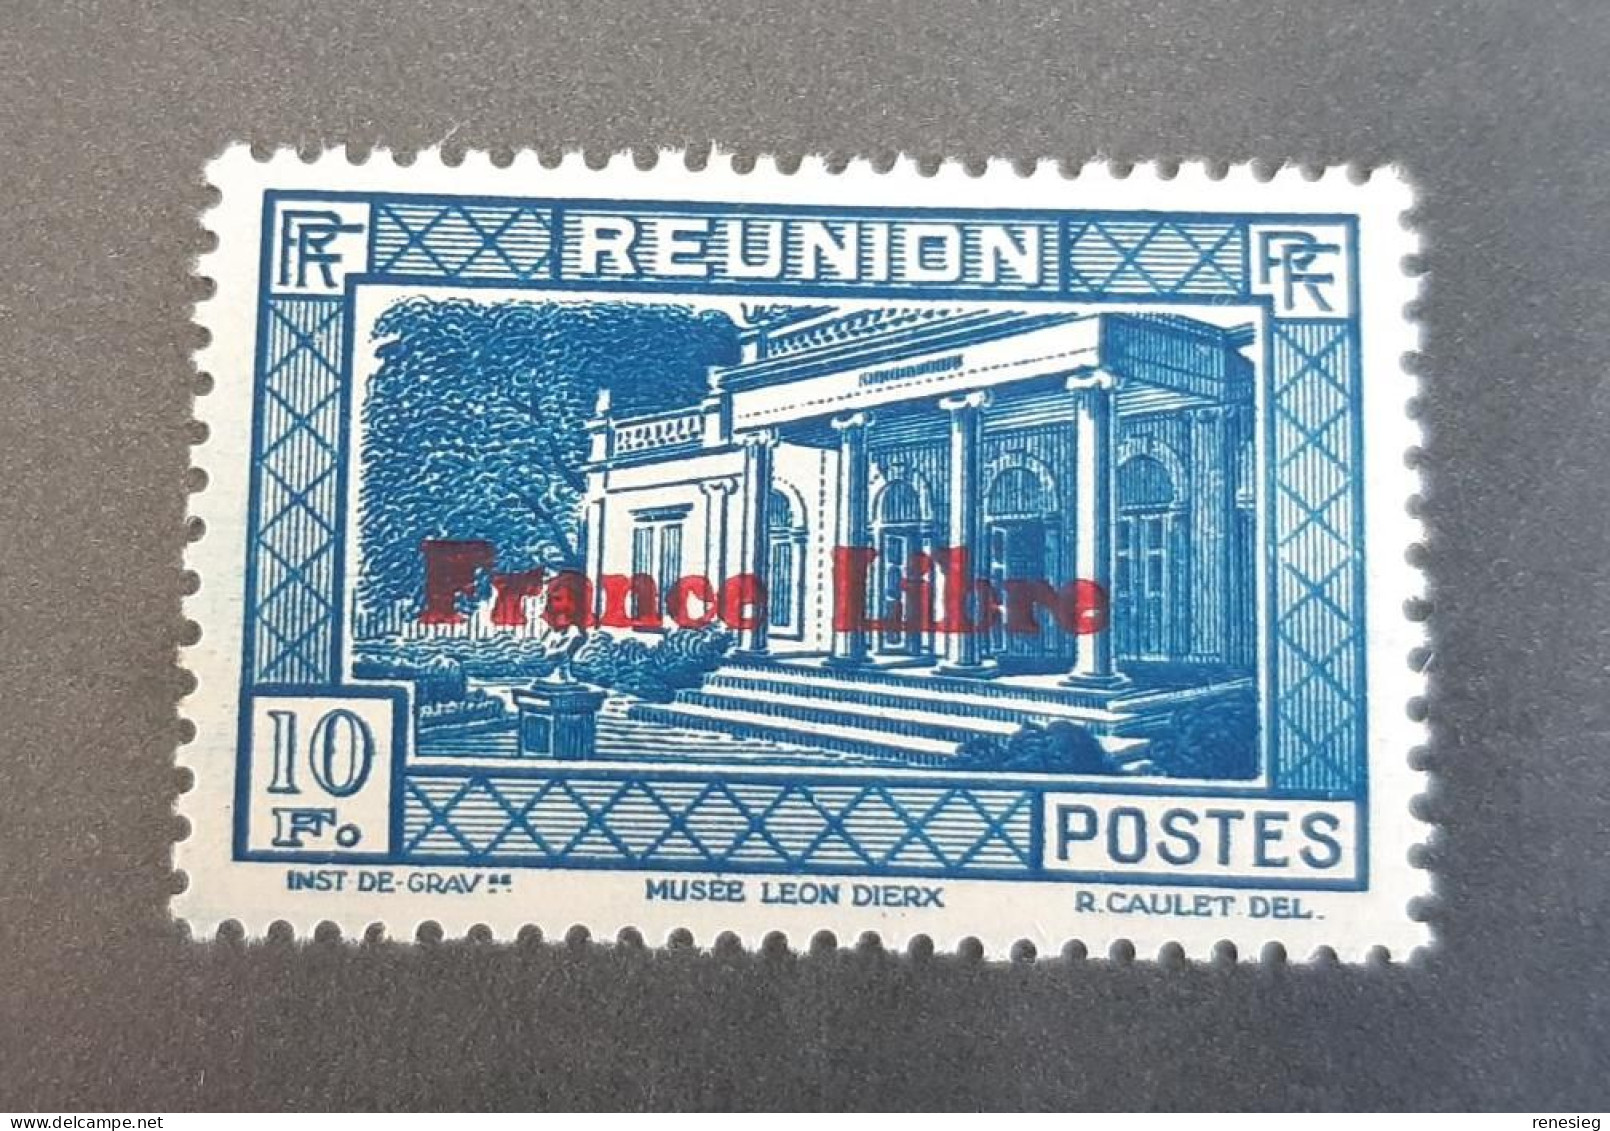 Réunion 1943 France Libre Yvert 214 MNH - Unused Stamps